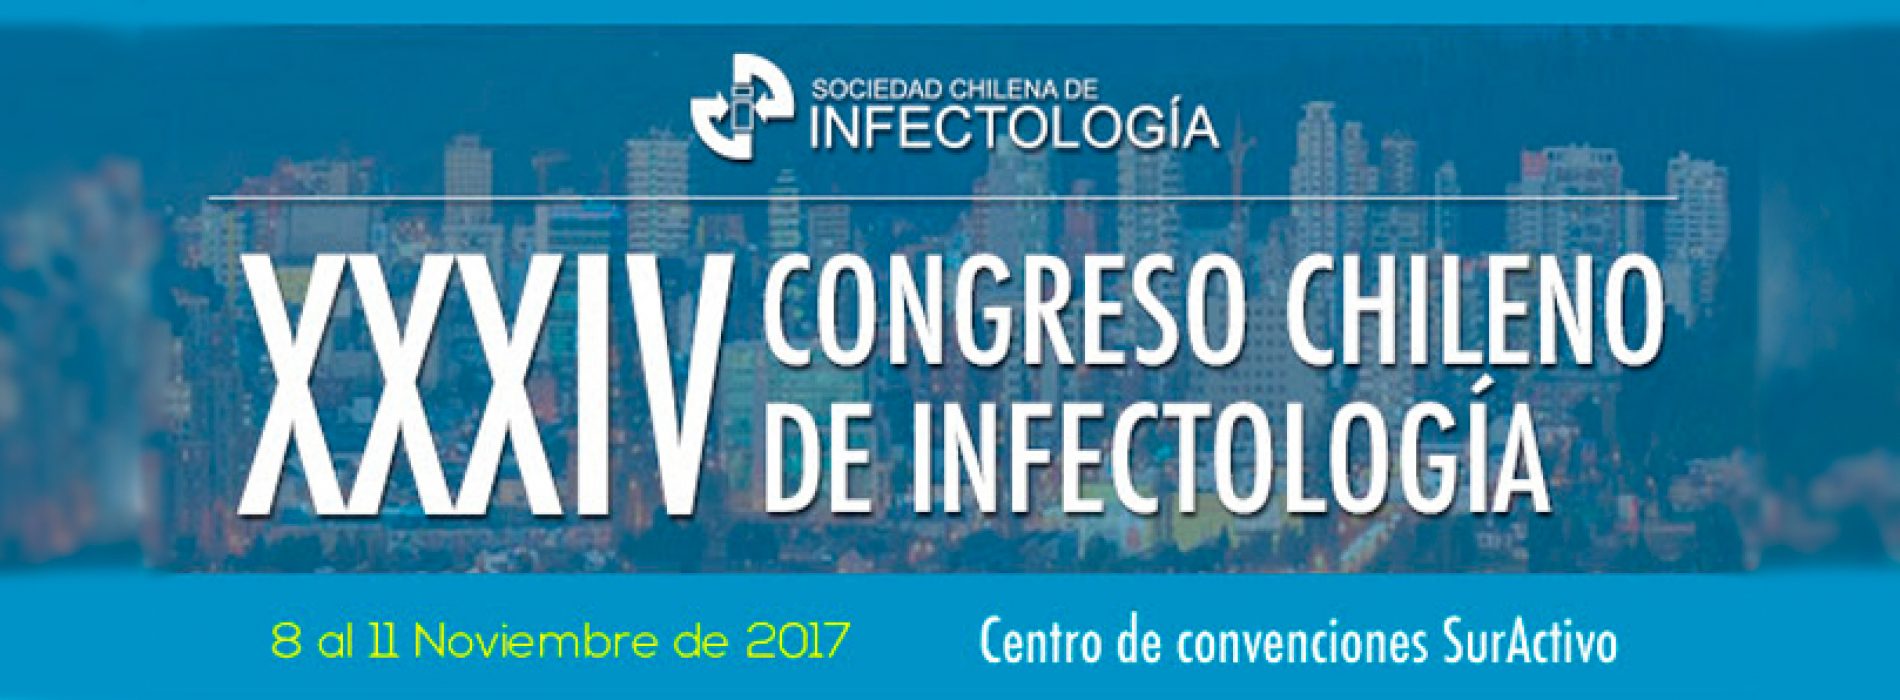 Invitación XXXIV Congreso Chileno de Infectología